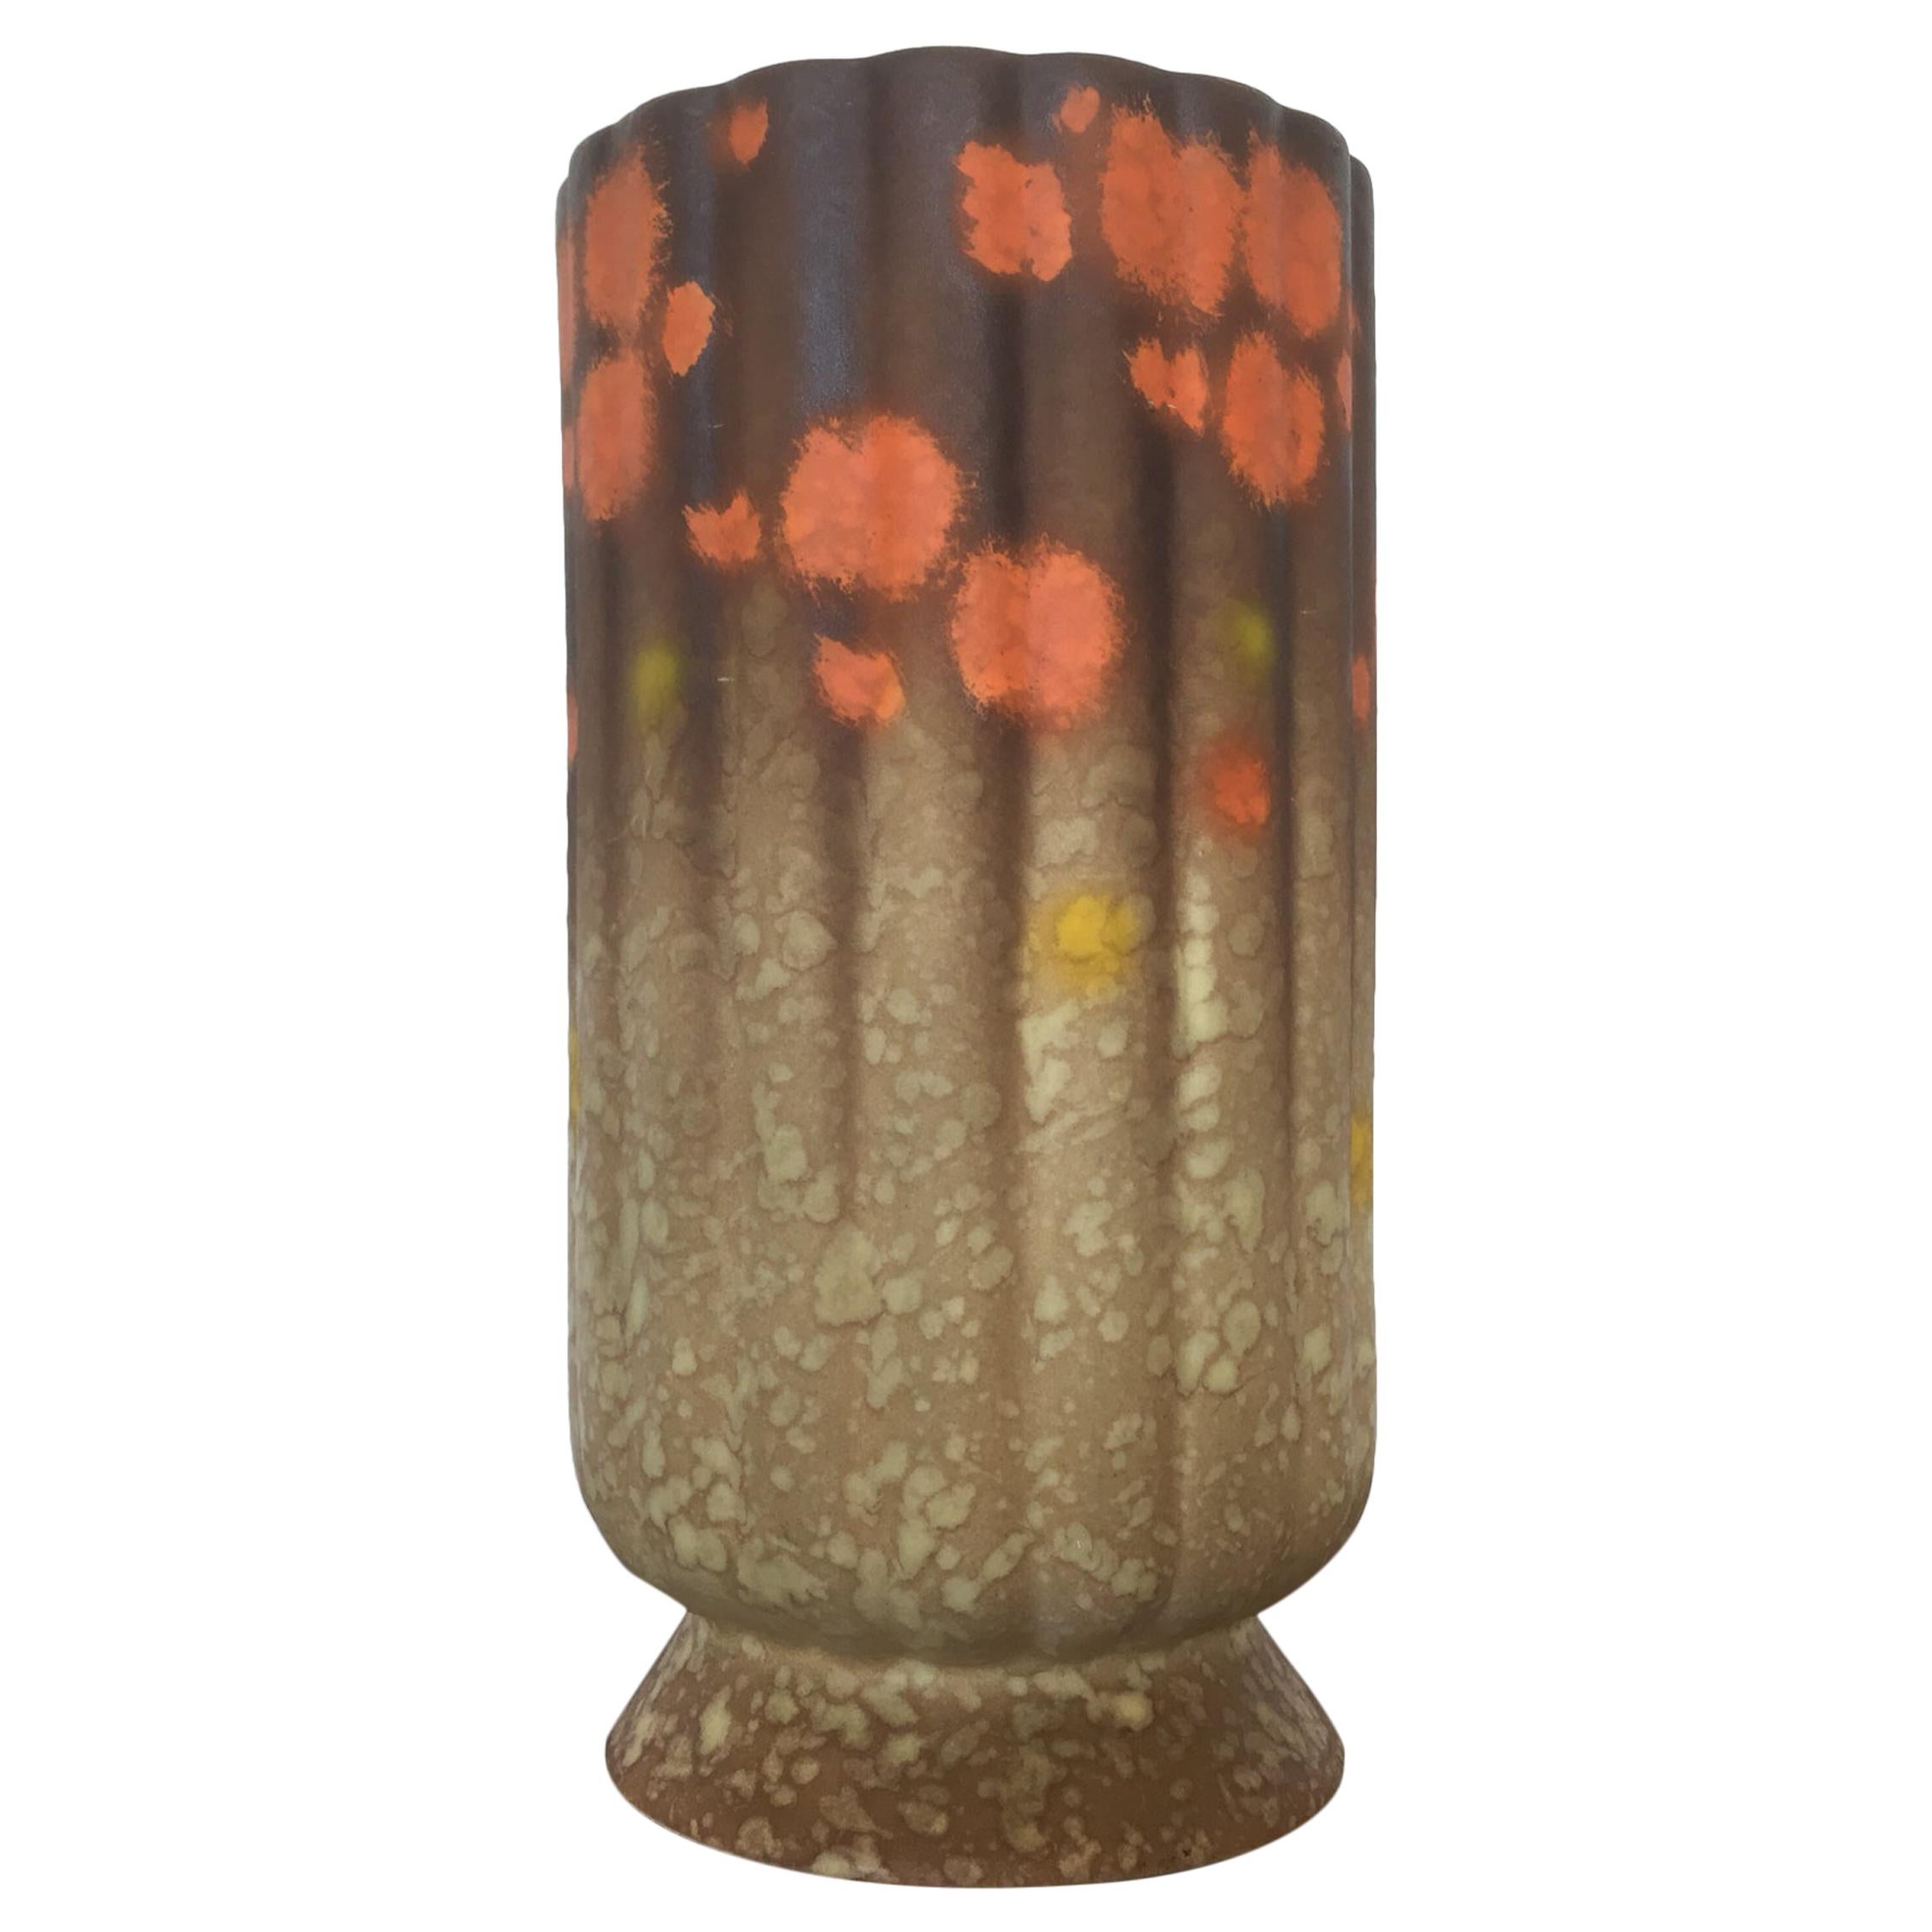 Midcentury Design Ceramic Vase by Ditmar Urbach, circa 1960s